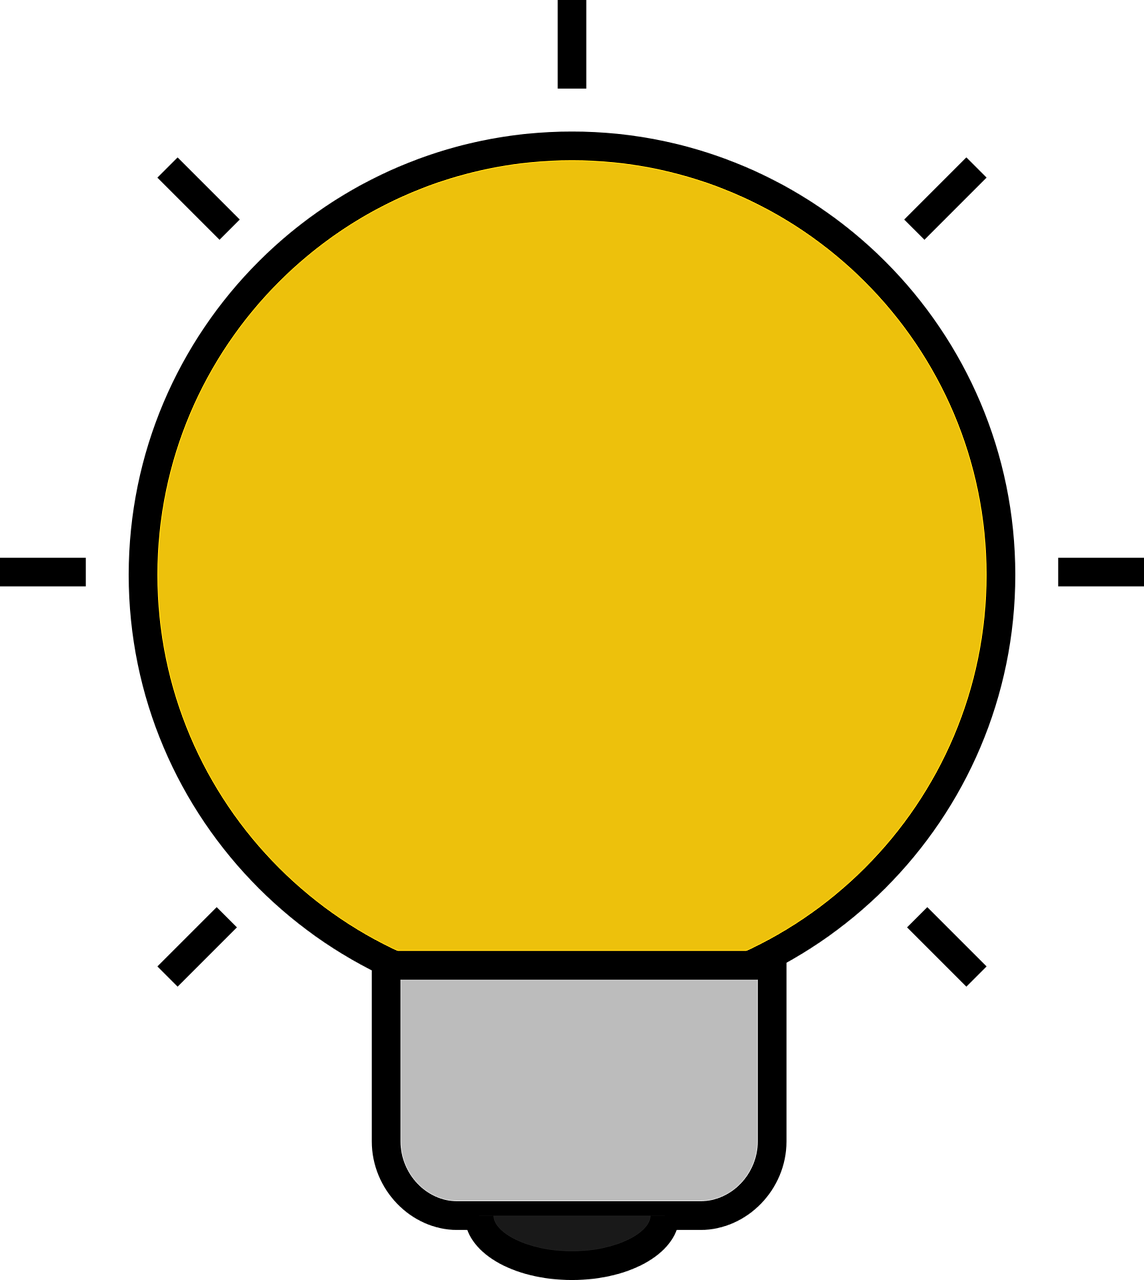 Illuminated Yellow Light Bulb Idea Graphic PNG image